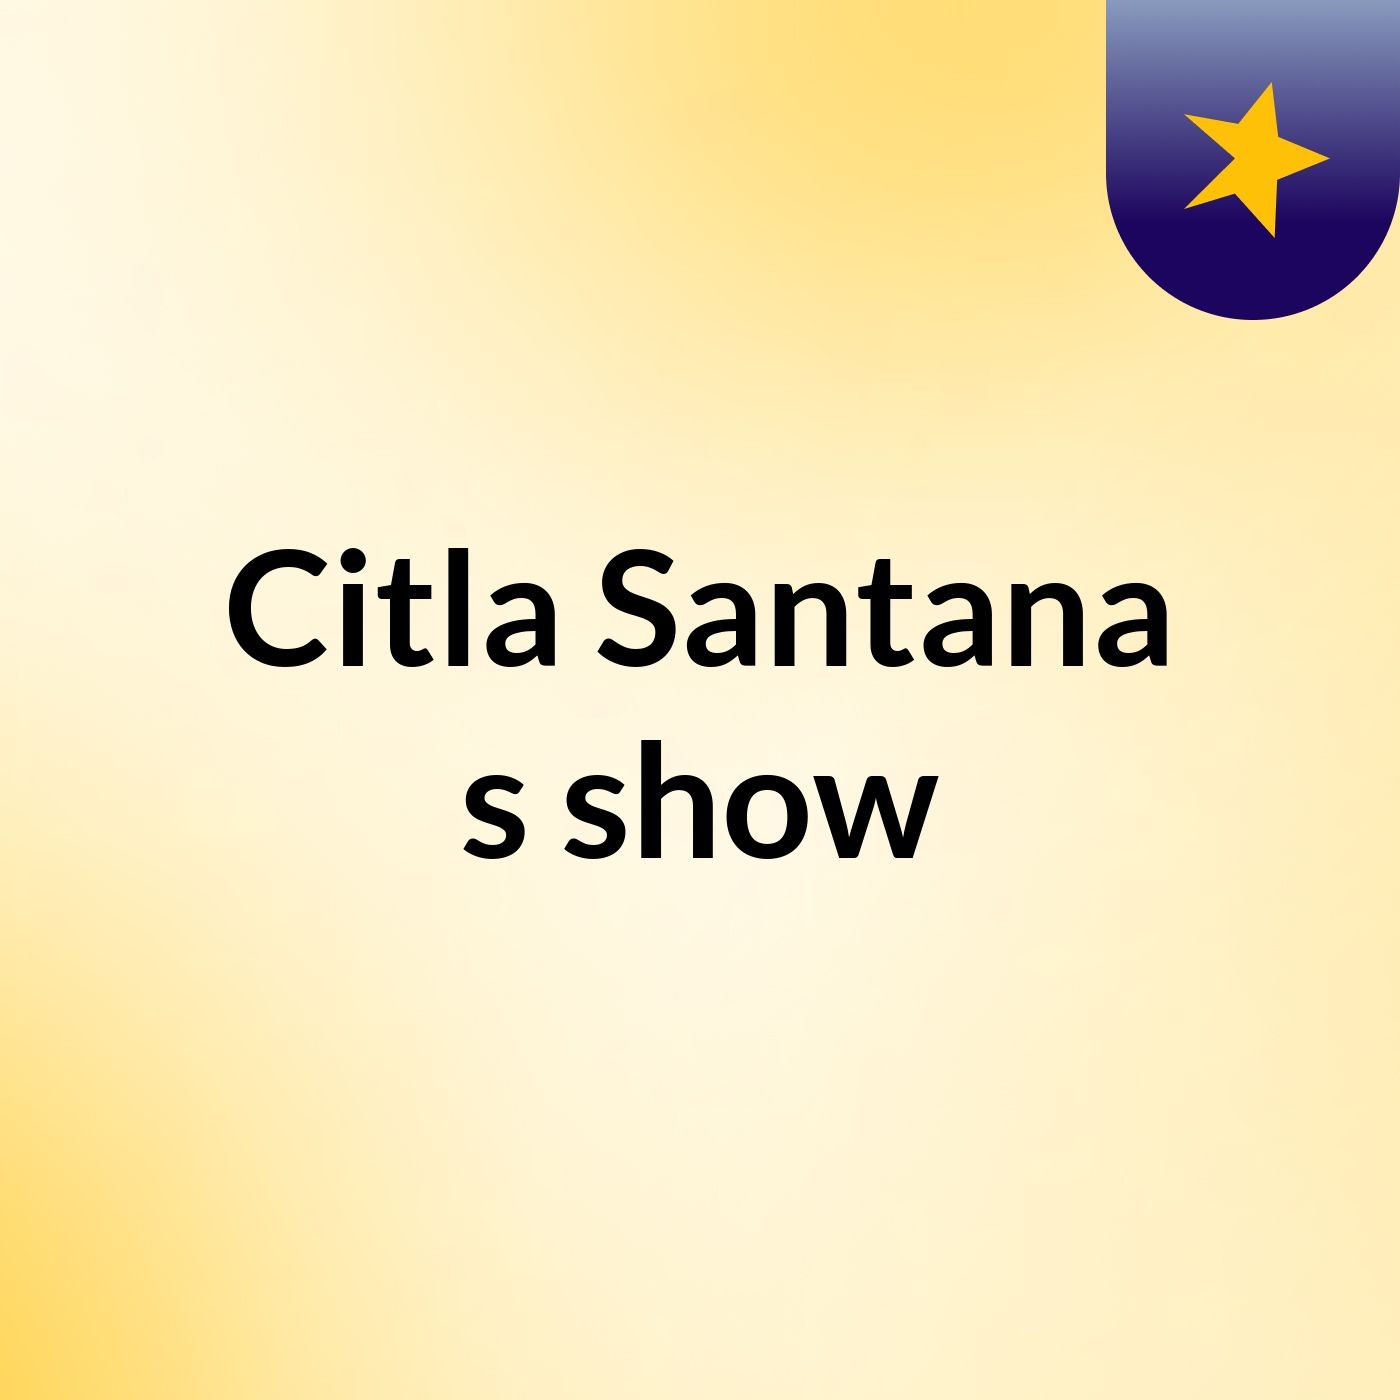 Citla Santana's show